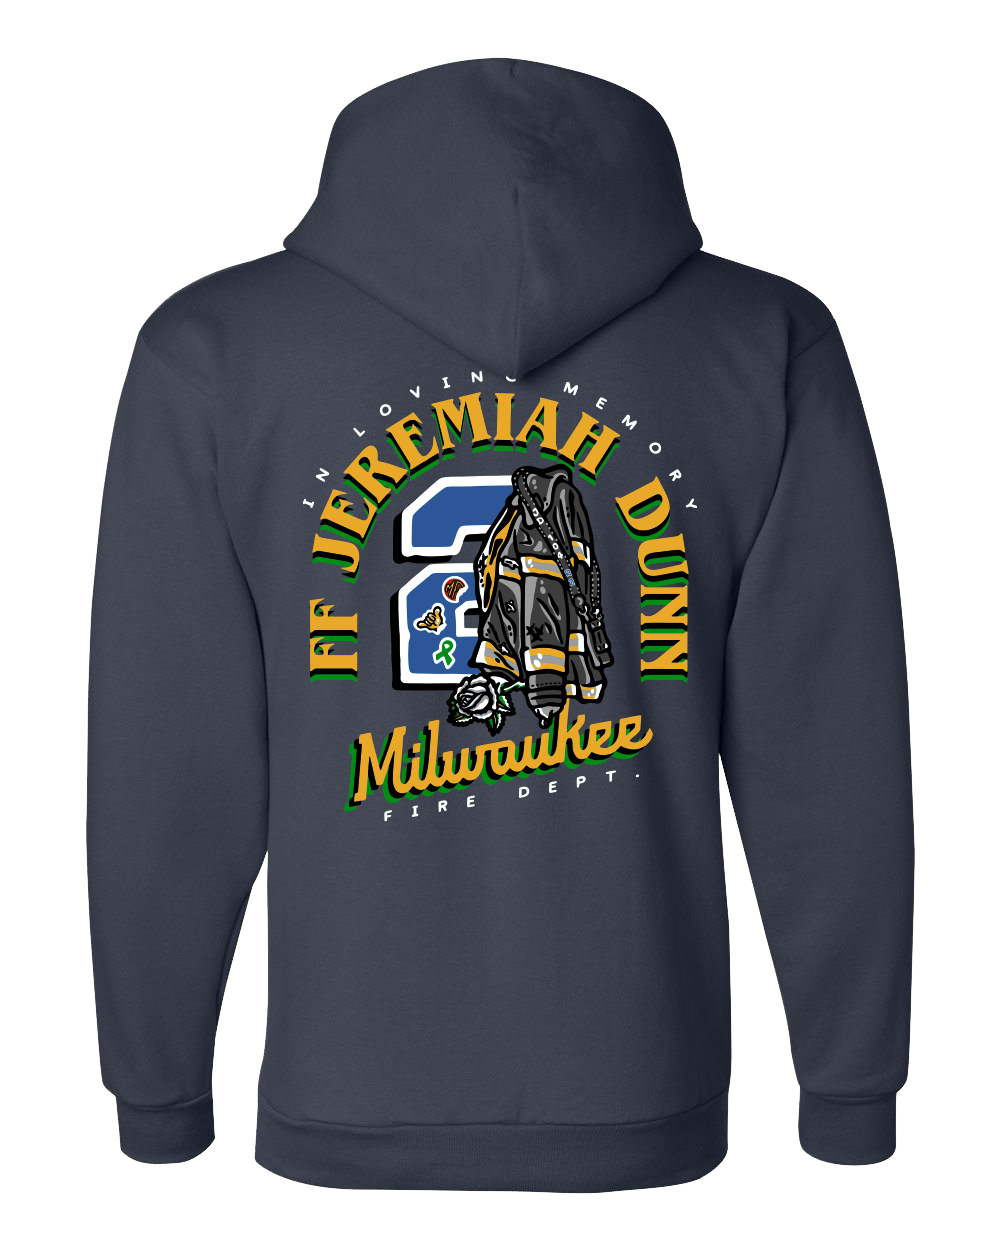 Milwaukee FF Dunn Memorial Sweatshirt